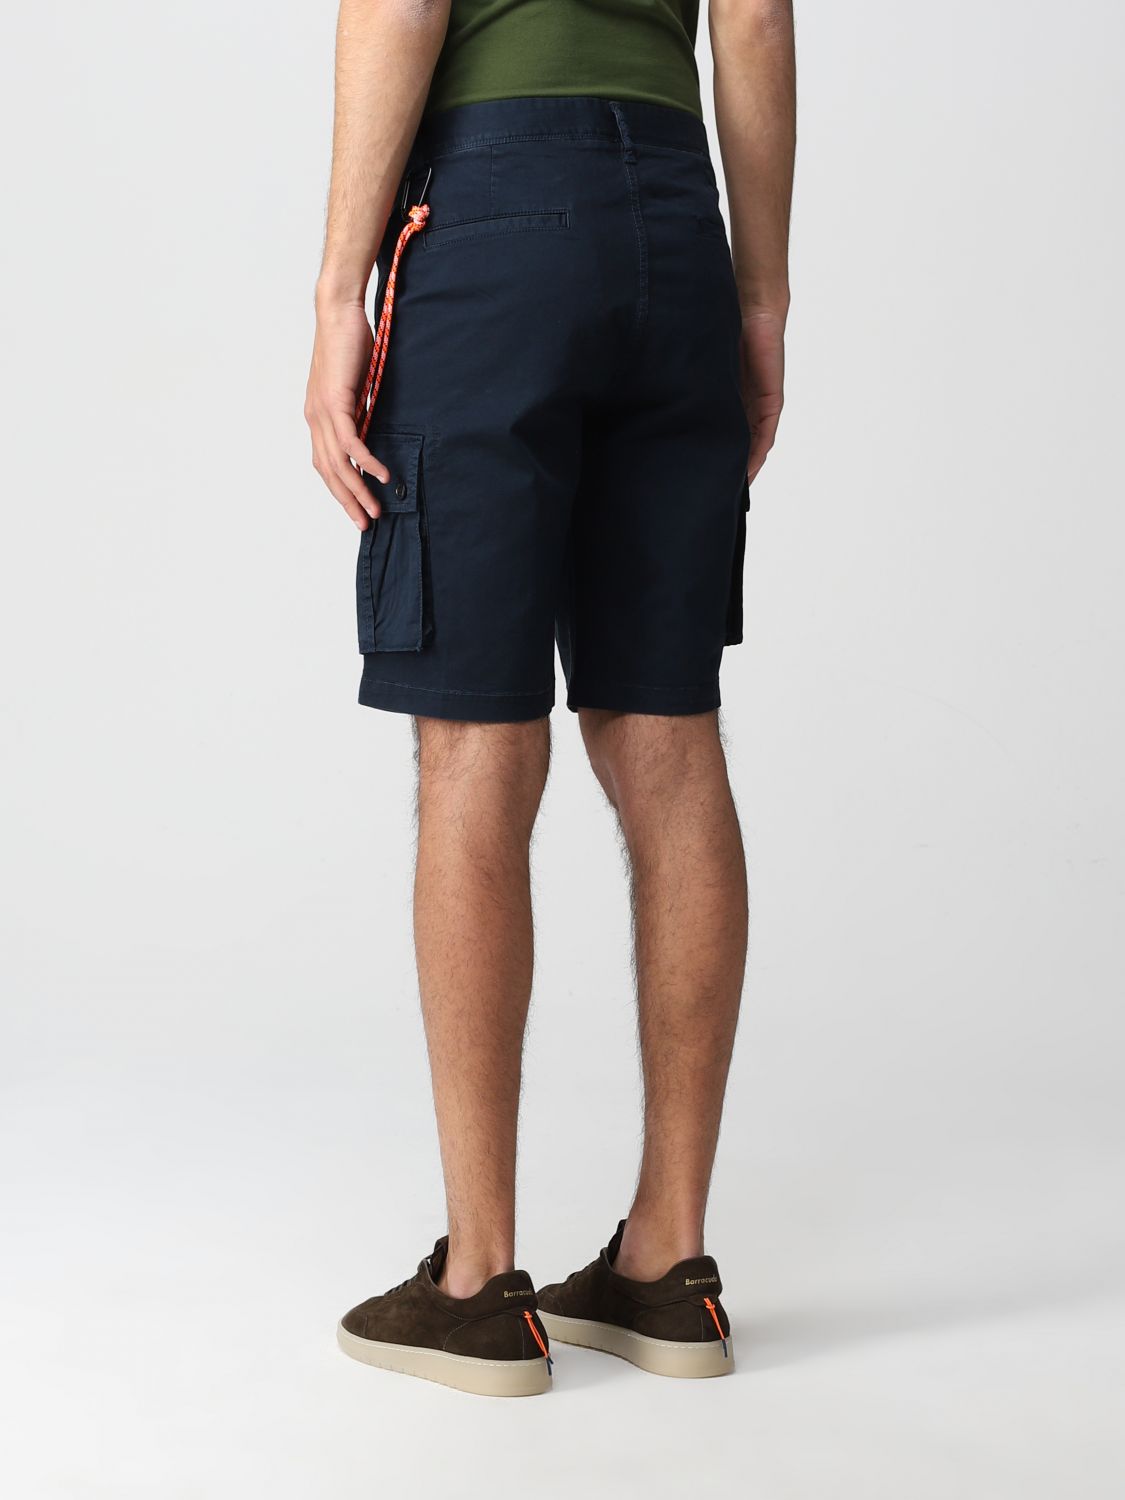 Pantalones cortos Sun 68: Pantalones cortos Sun 68 para hombre azul marino 2